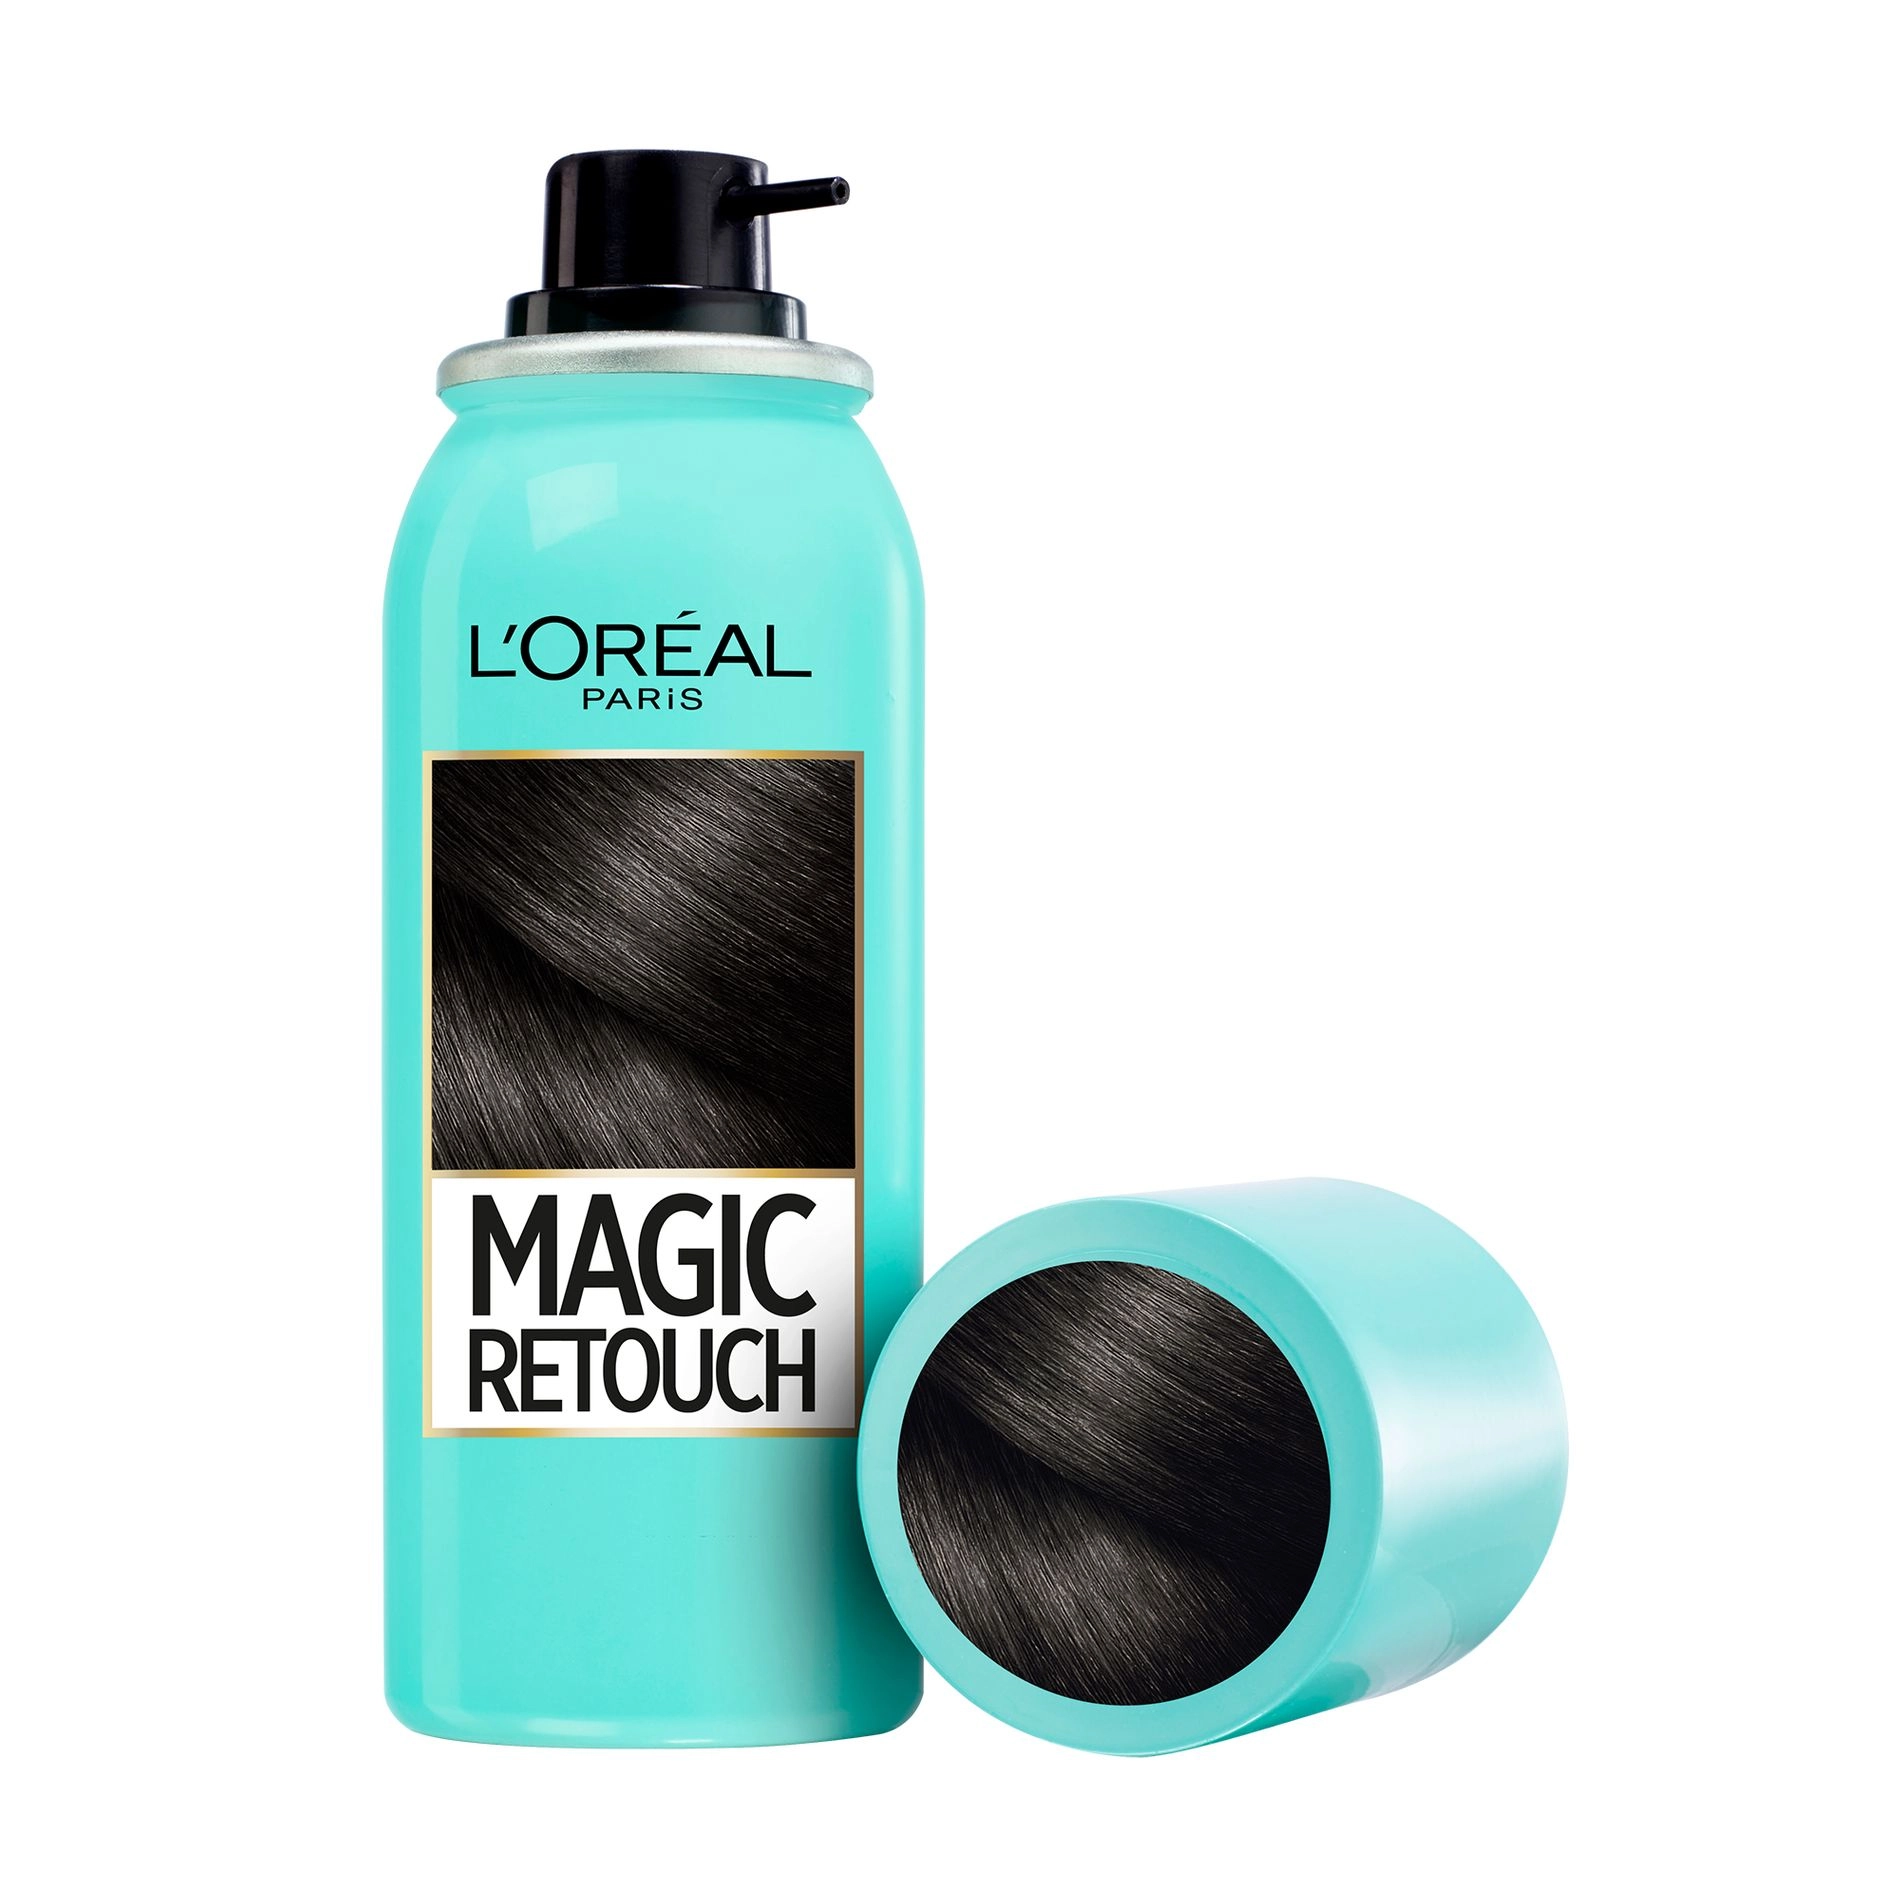 L’Oreal Paris Тонирующий спрей для волос L'Oreal Paris Magic Retouch Черный, 75 мл - фото N2